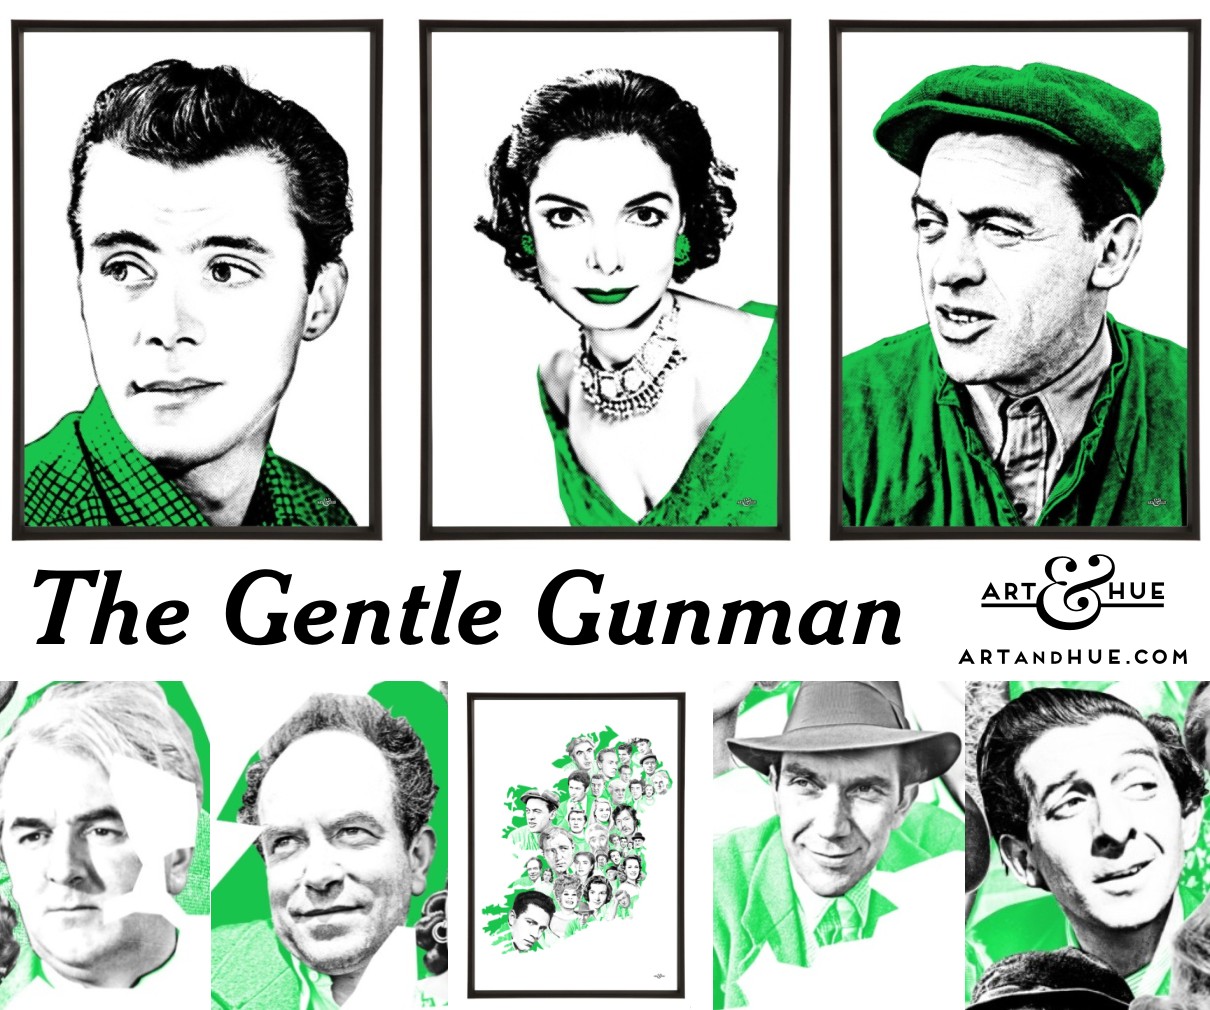 The Gentle Gunman cast